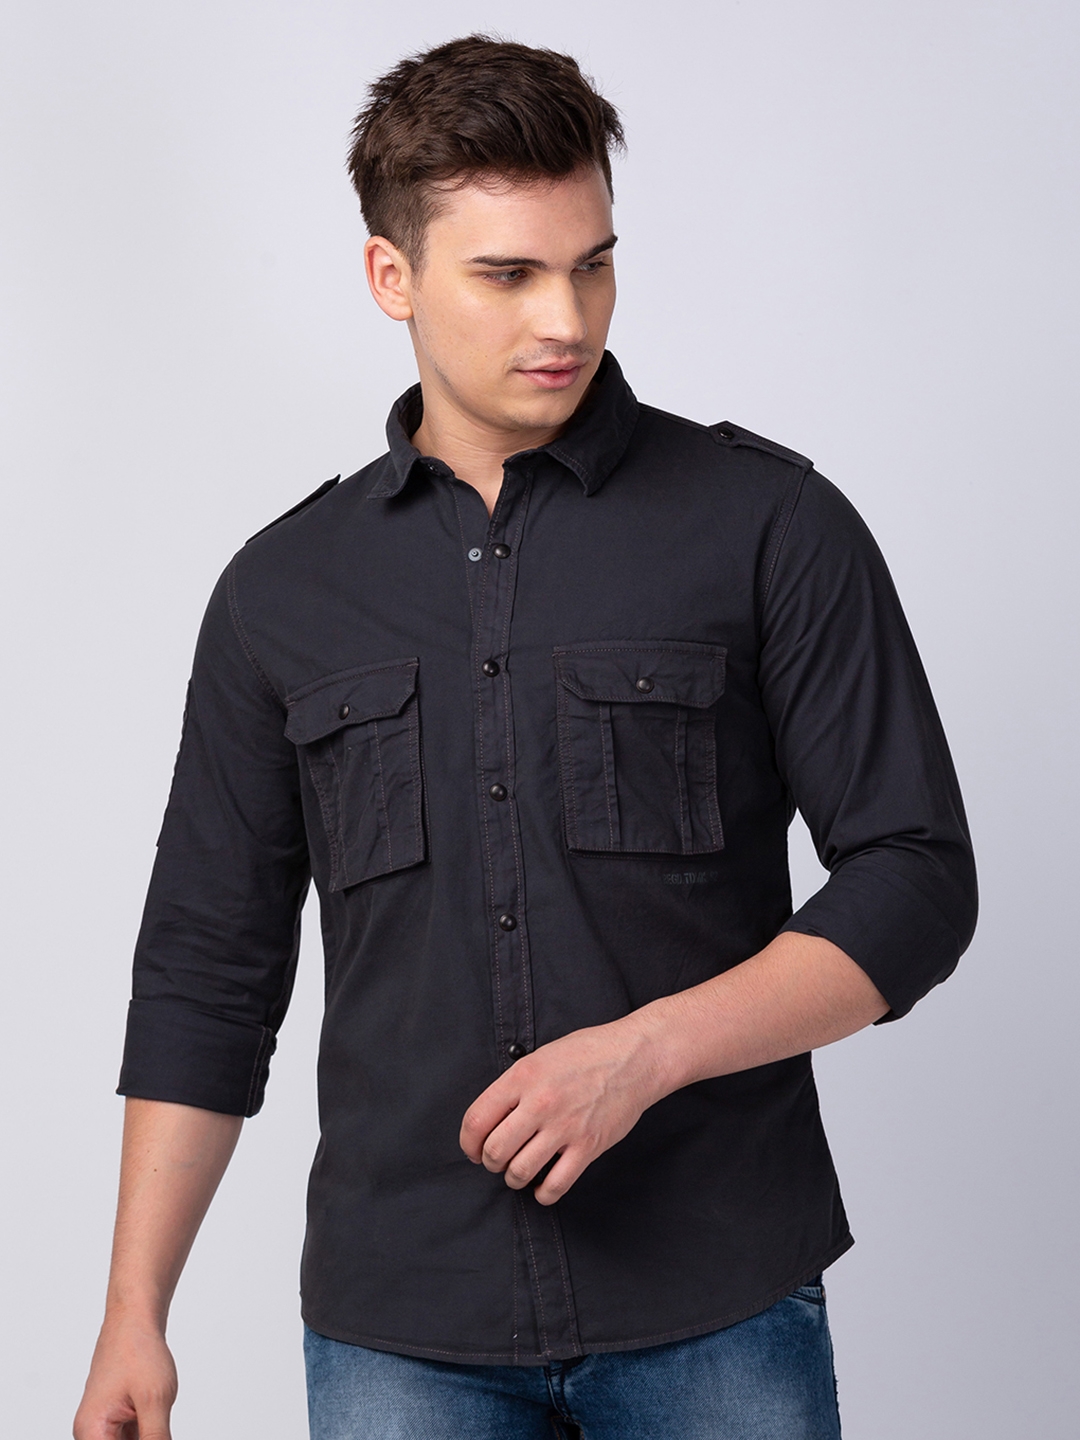 spykar | Men's Grey Cotton Solid Casual Shirts